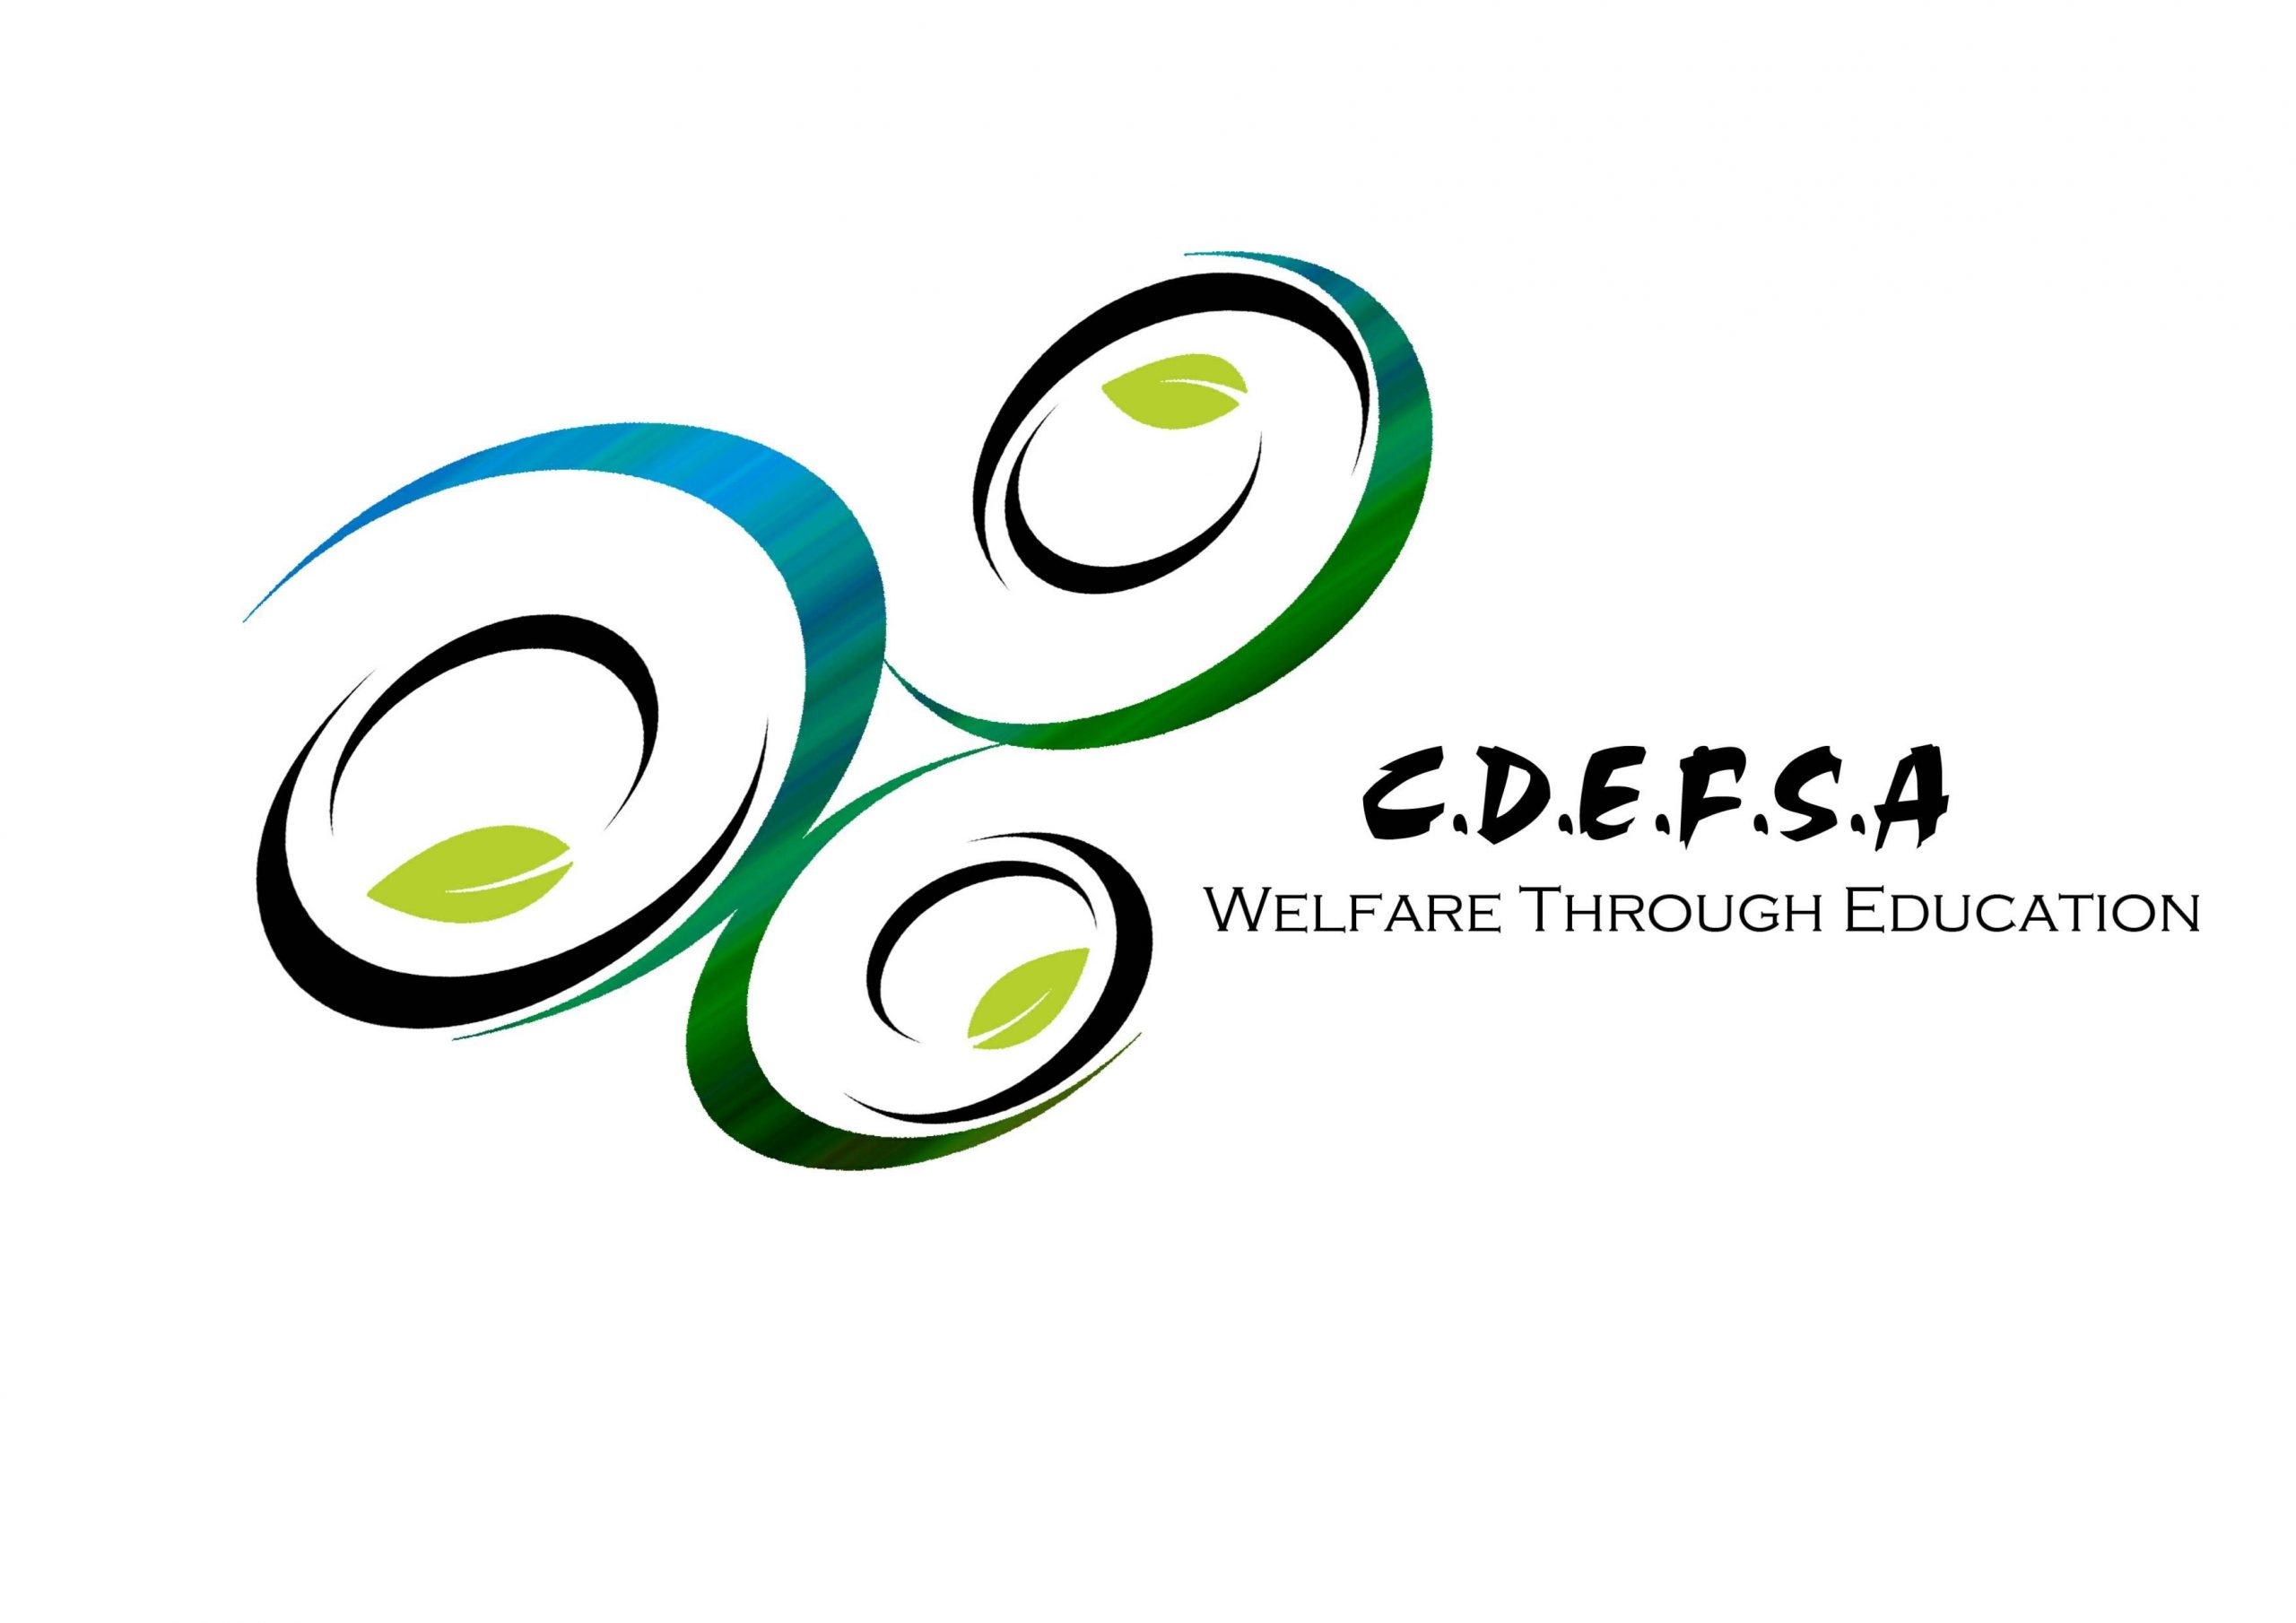 CDEFSA(Community Development & Education Foundation of South Africa)